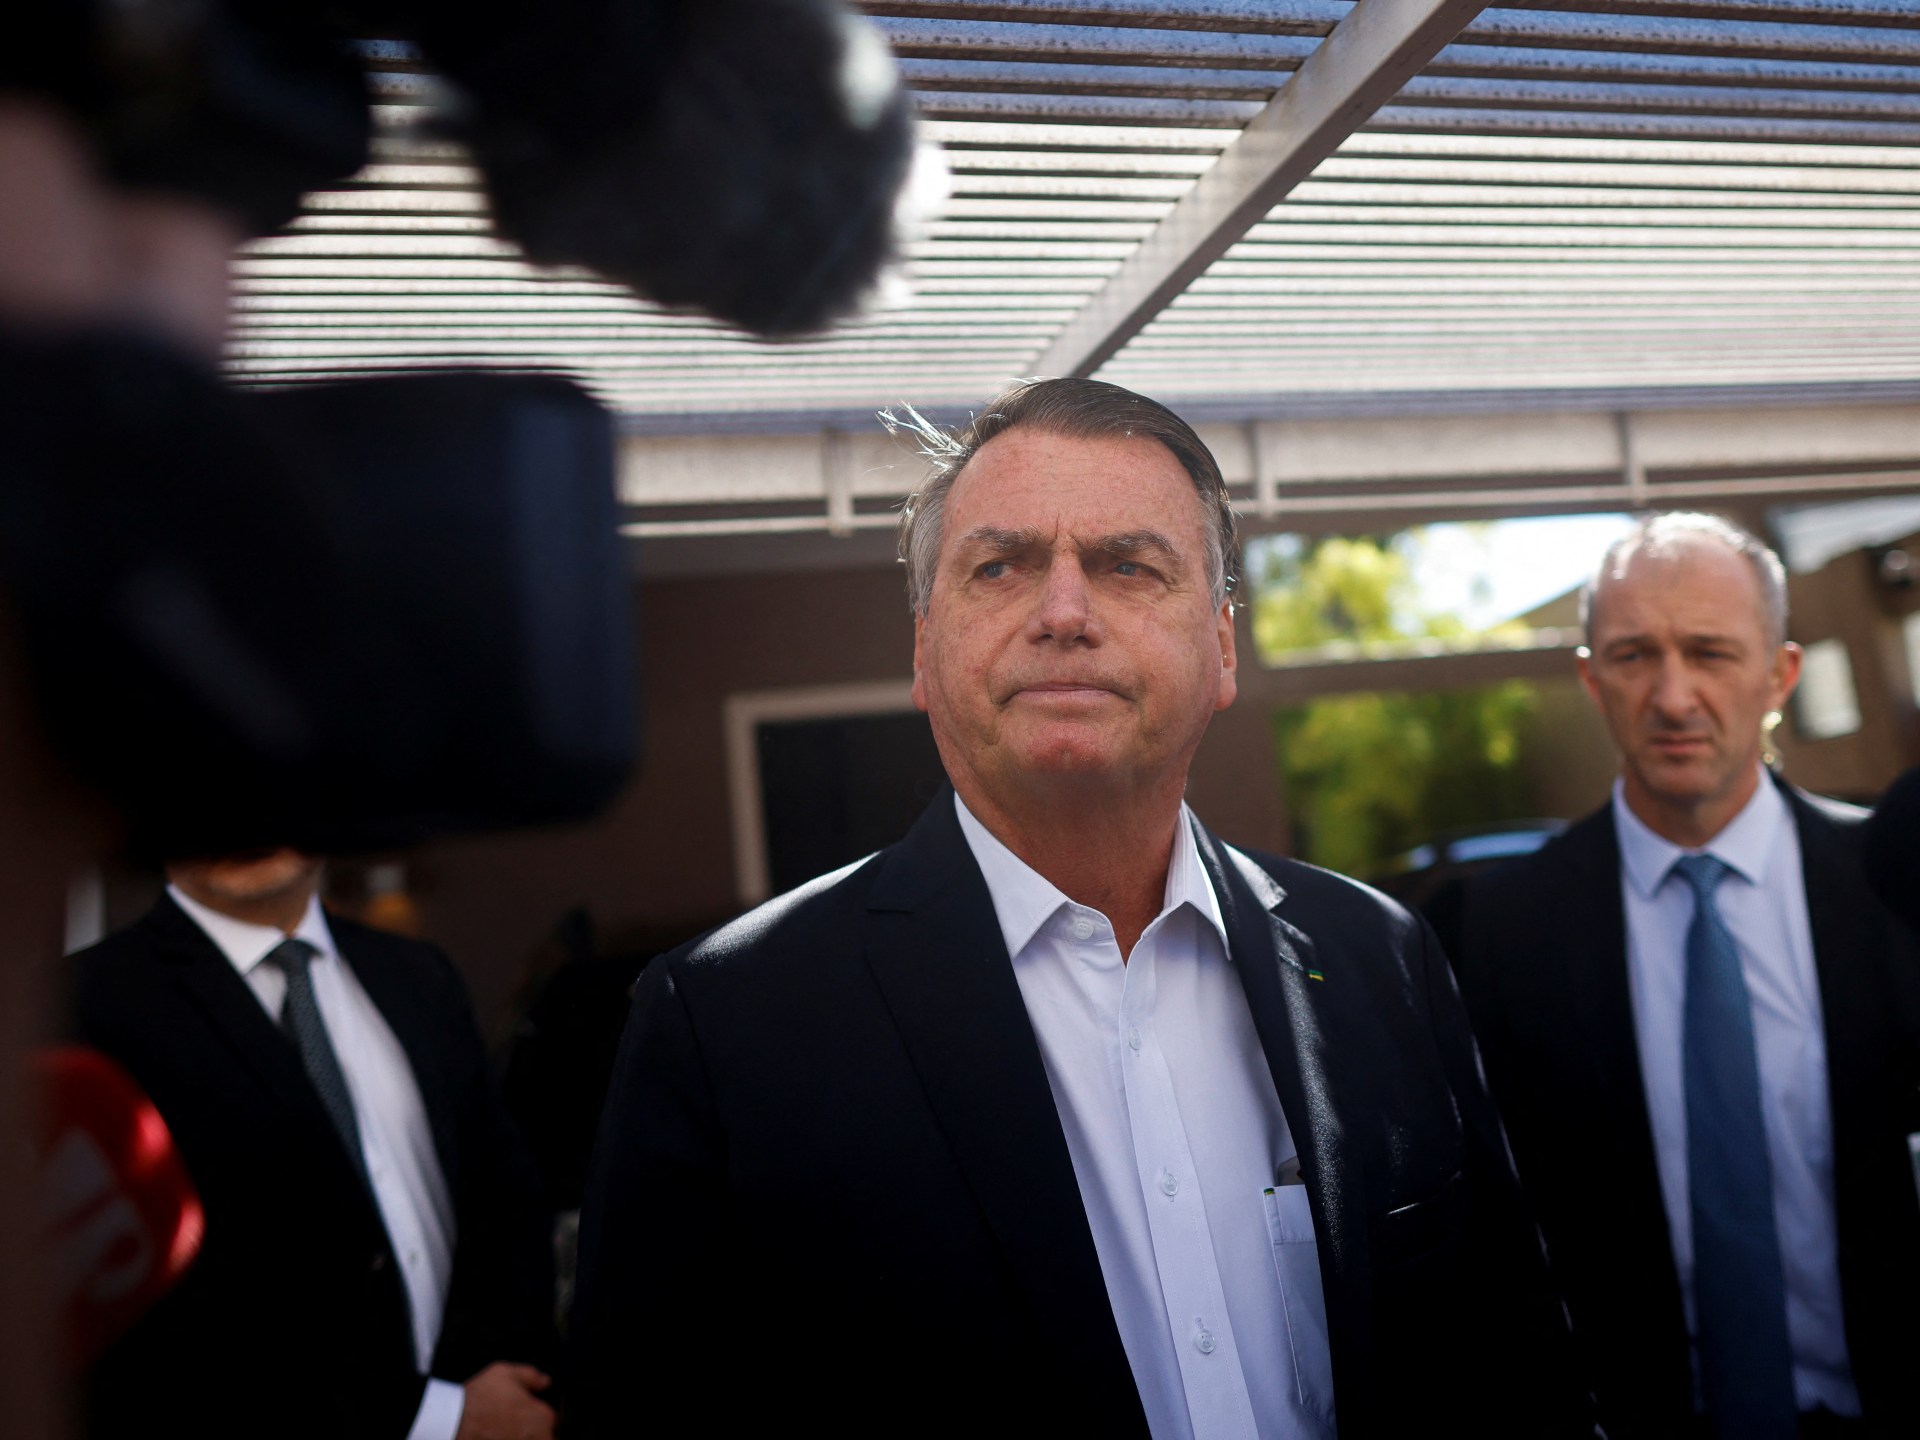 Polisi Brasil Mengetuk Rumah Mantan Presiden Bolsonaro, Menyita Telepon |  Berita Jair Bolsonaro